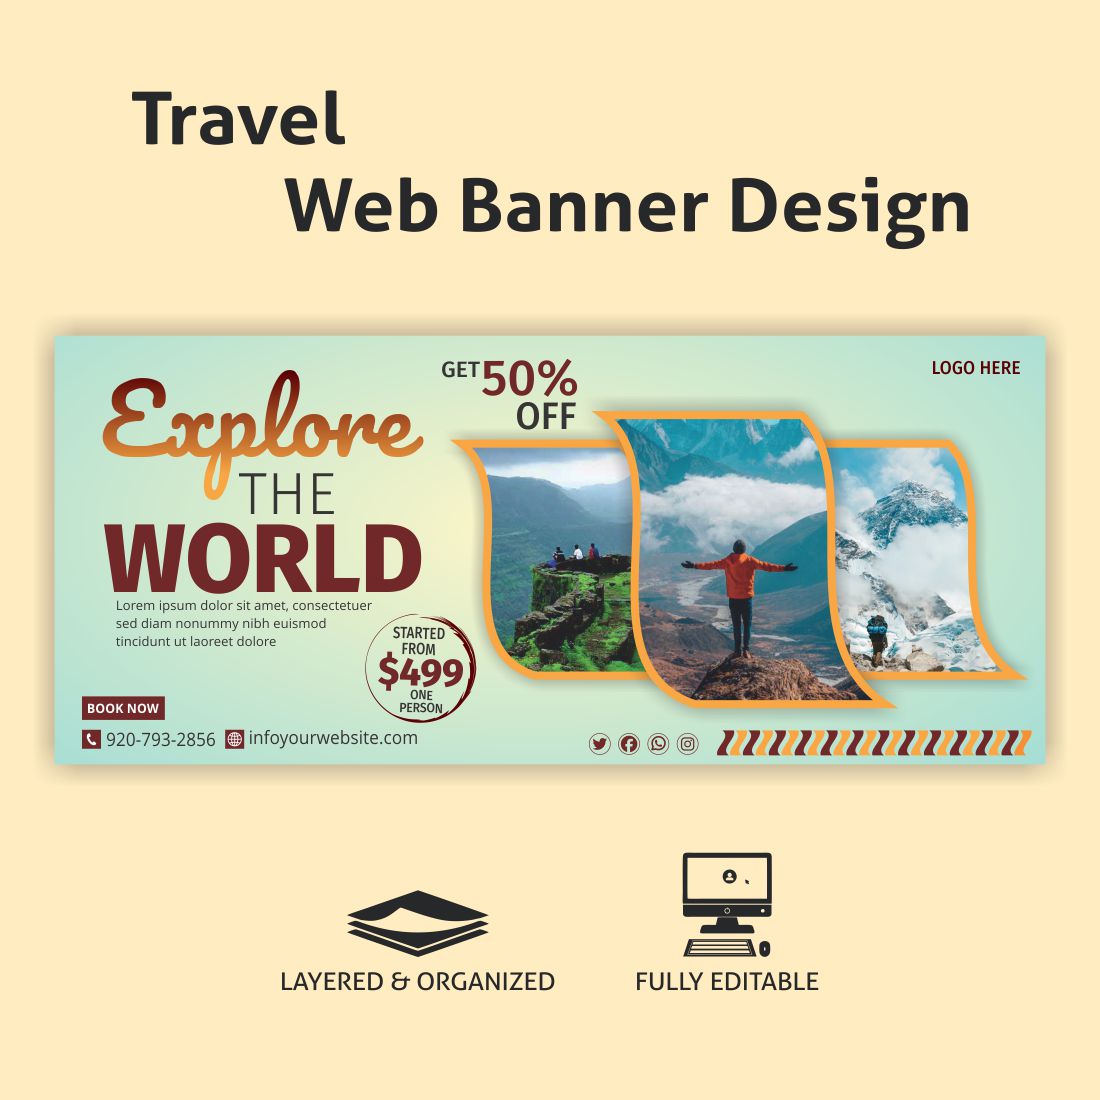 Travel Web Banner Design cover image.